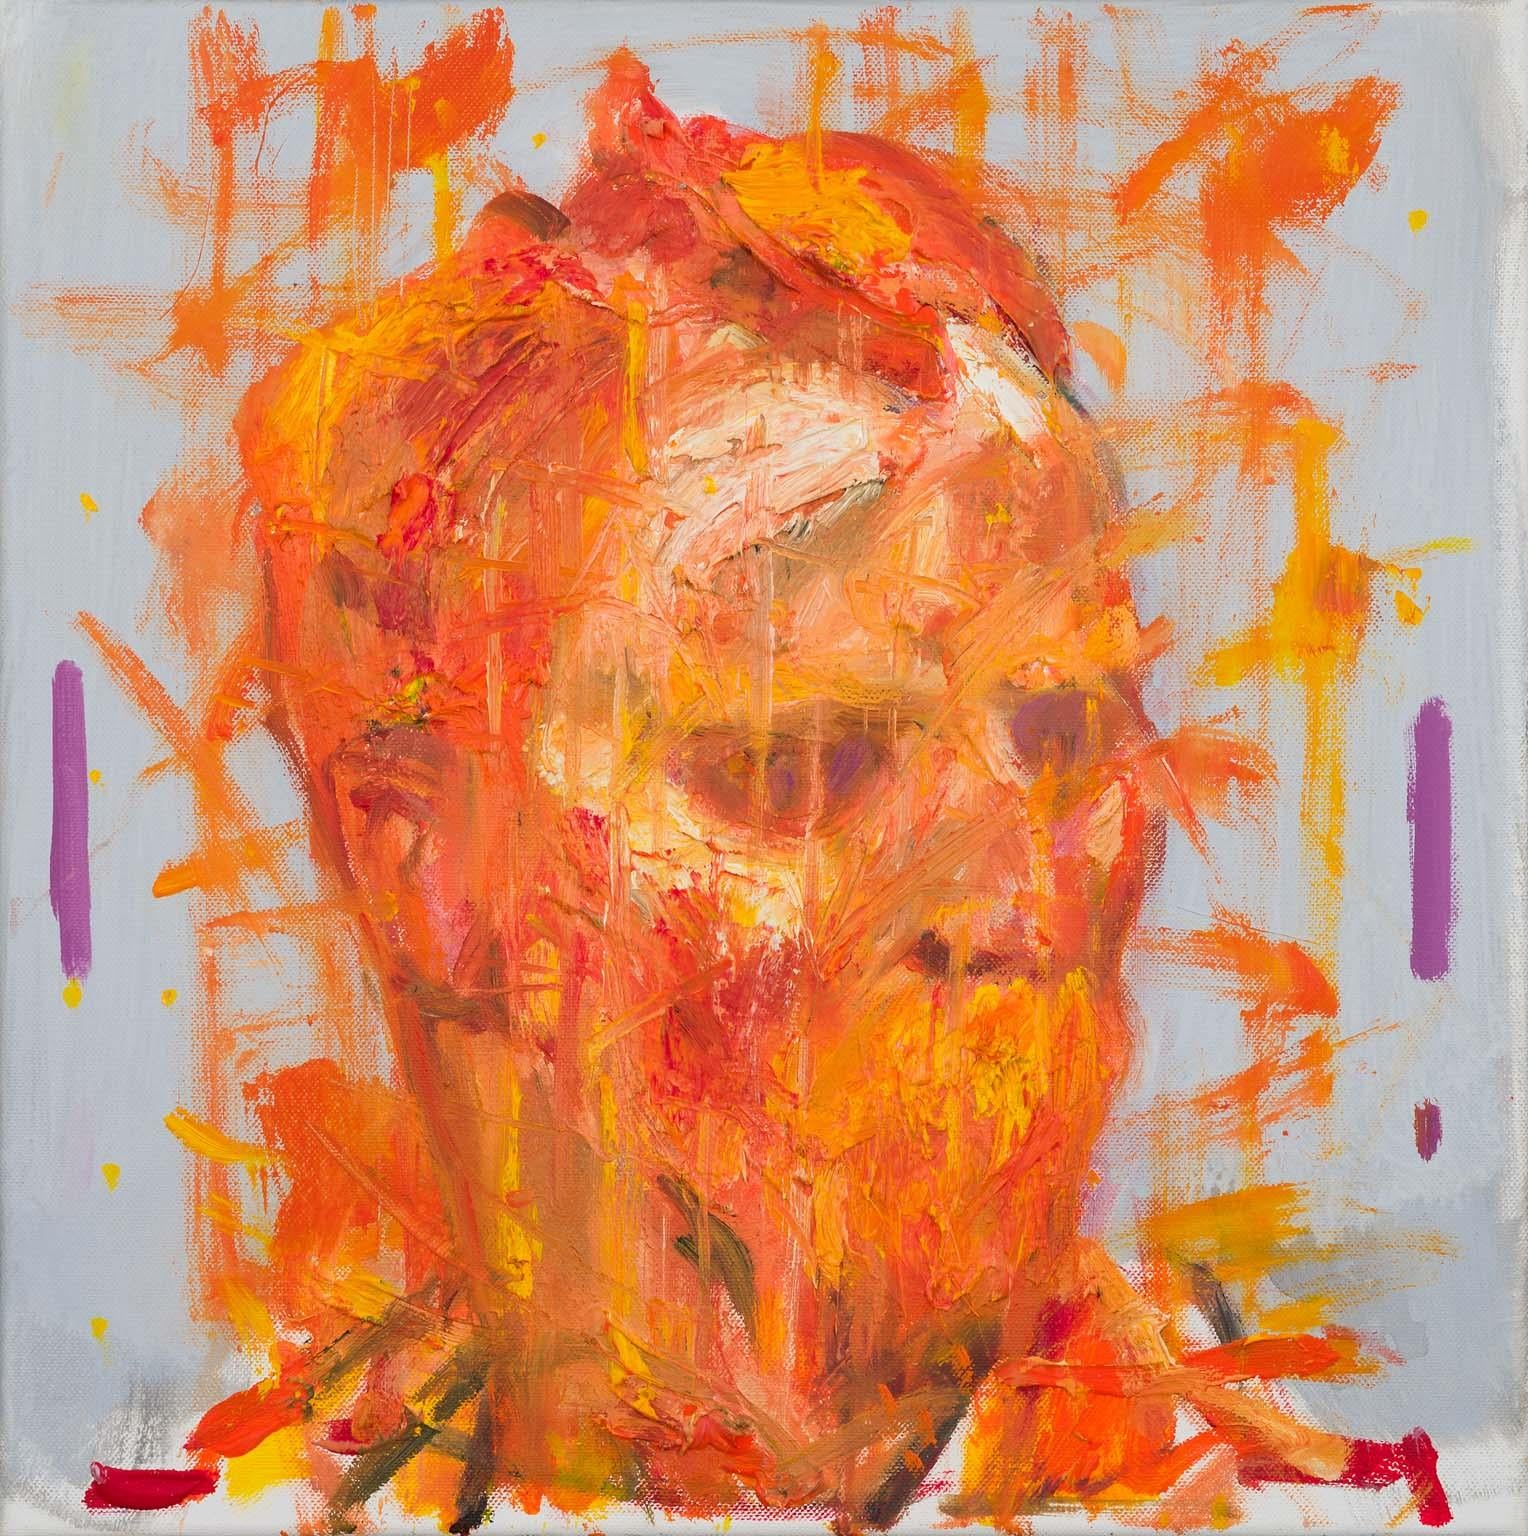 Milan Markovich Portrait Painting - Orange Sun - contemporary oil on canvas portrait of artist Vincent Van Gogh